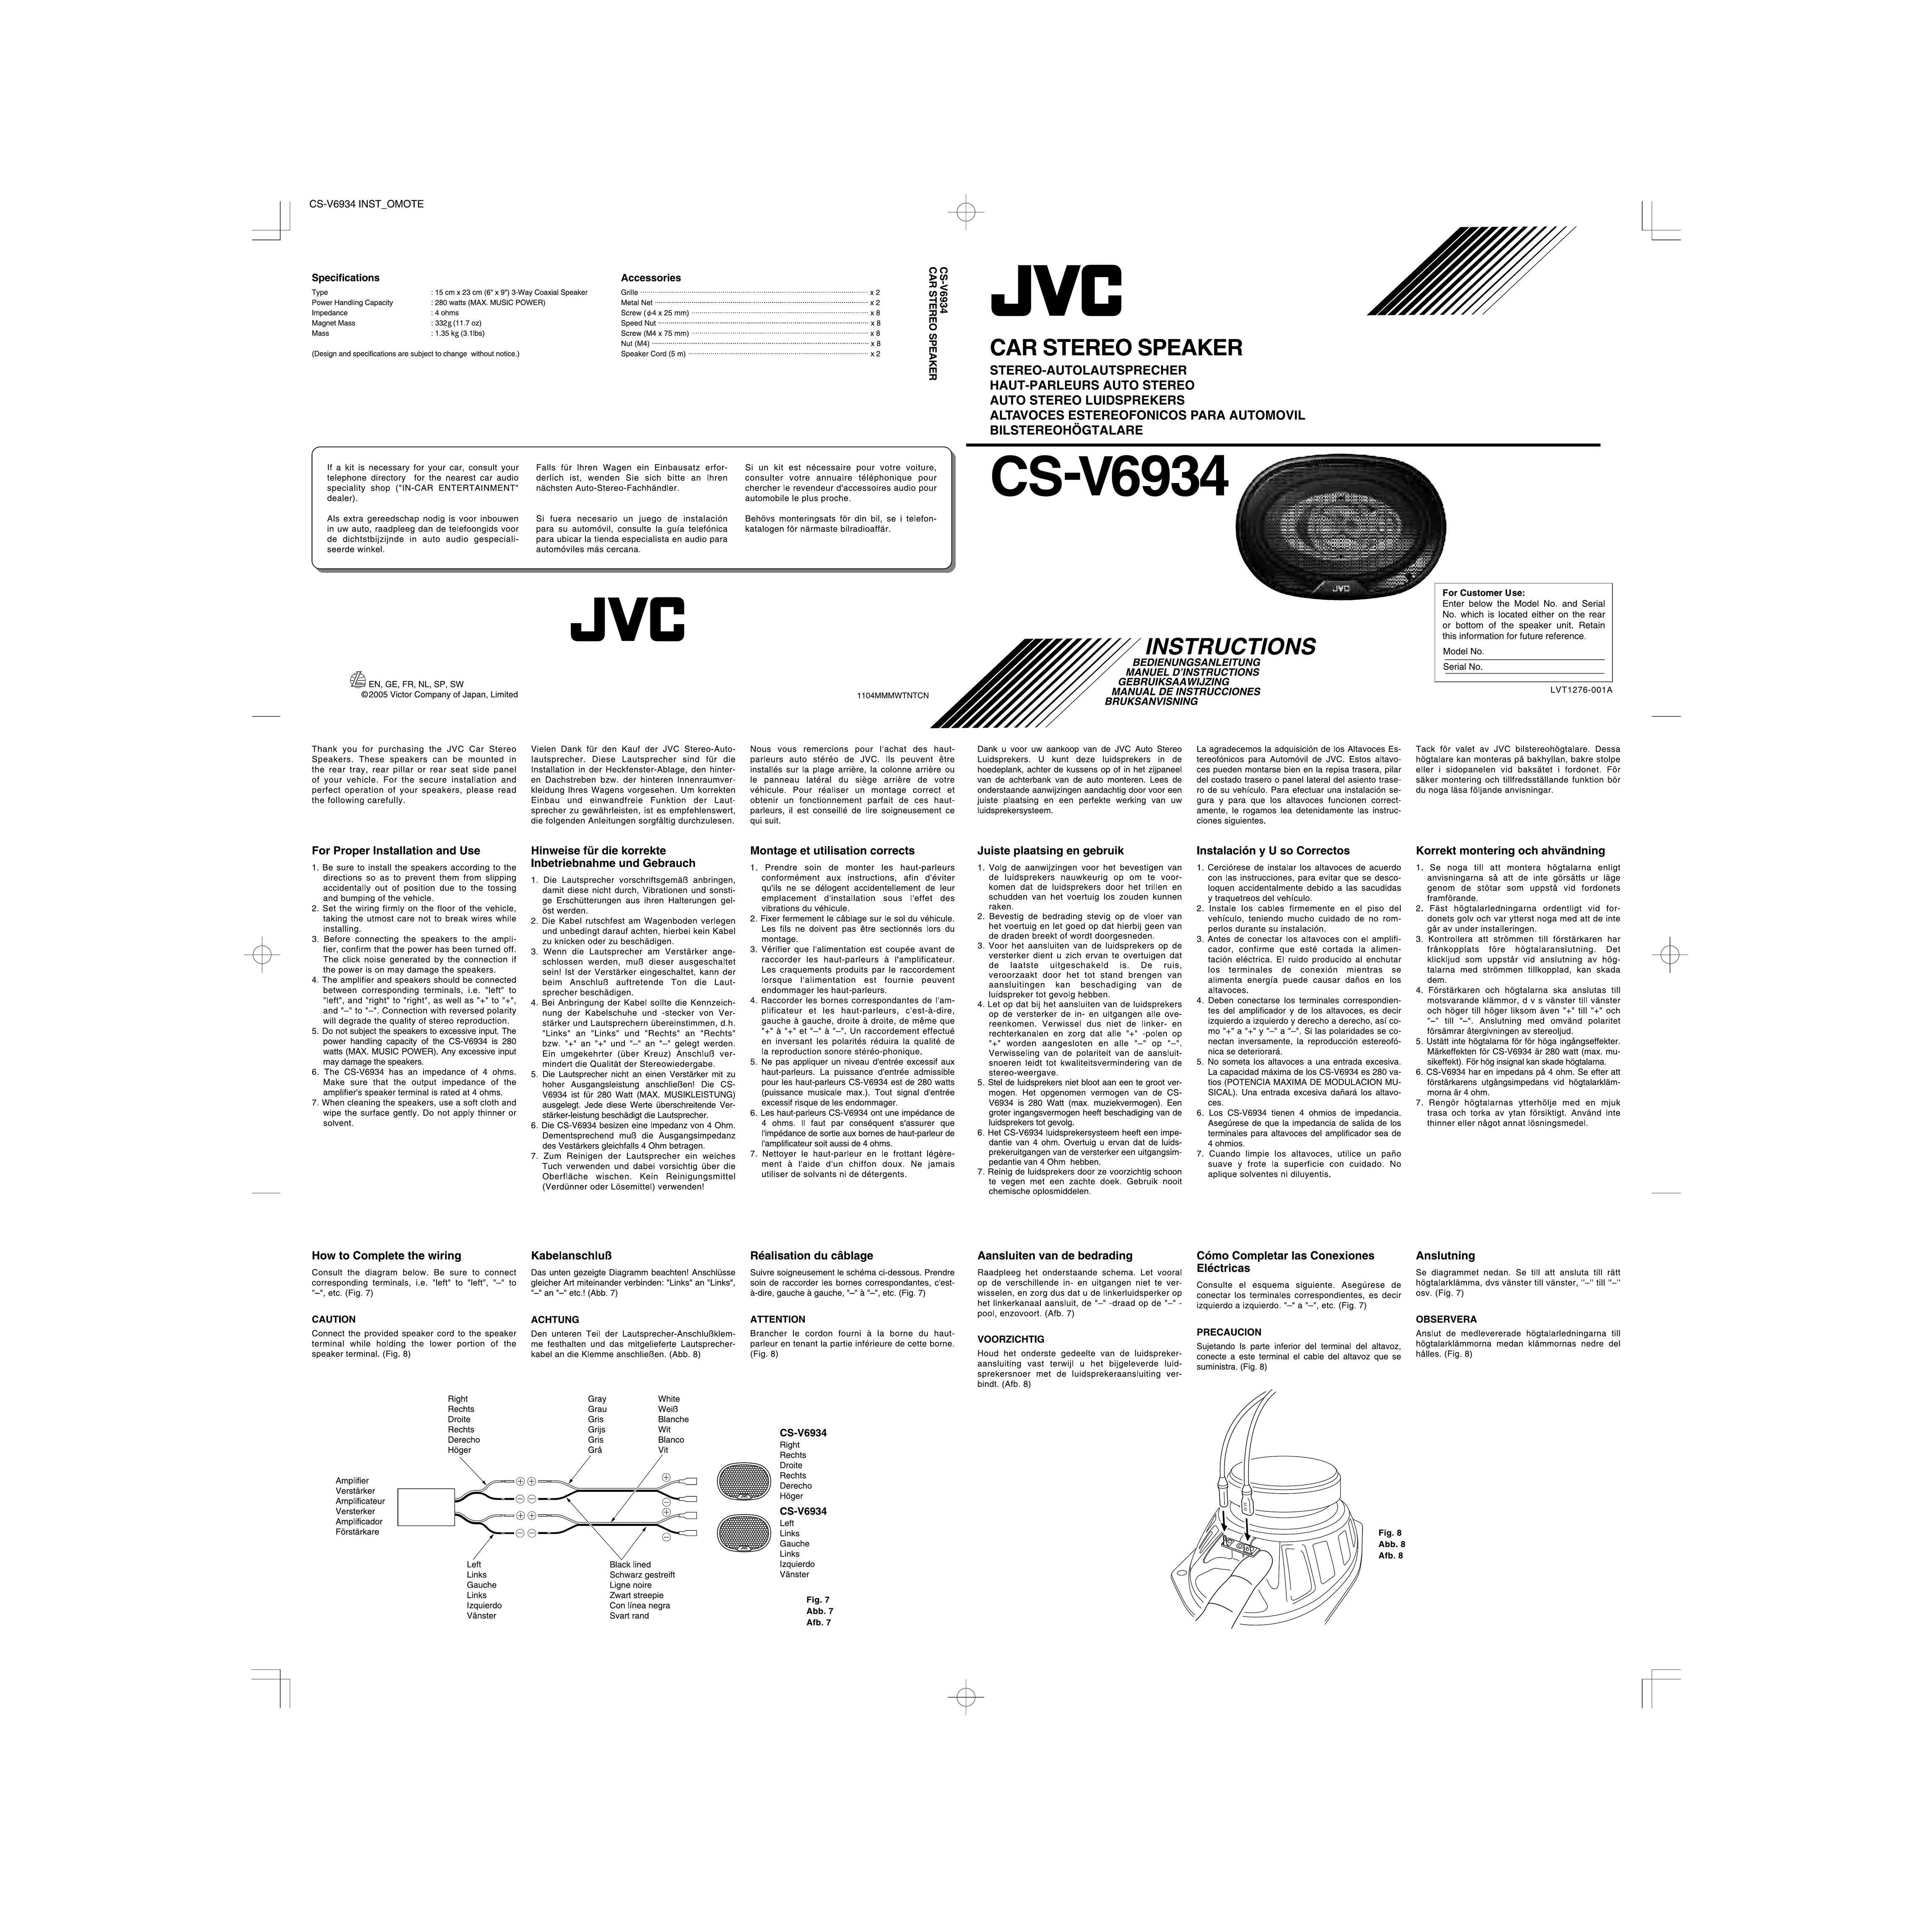 JVC CS-V6934 Stepper Machine User Manual